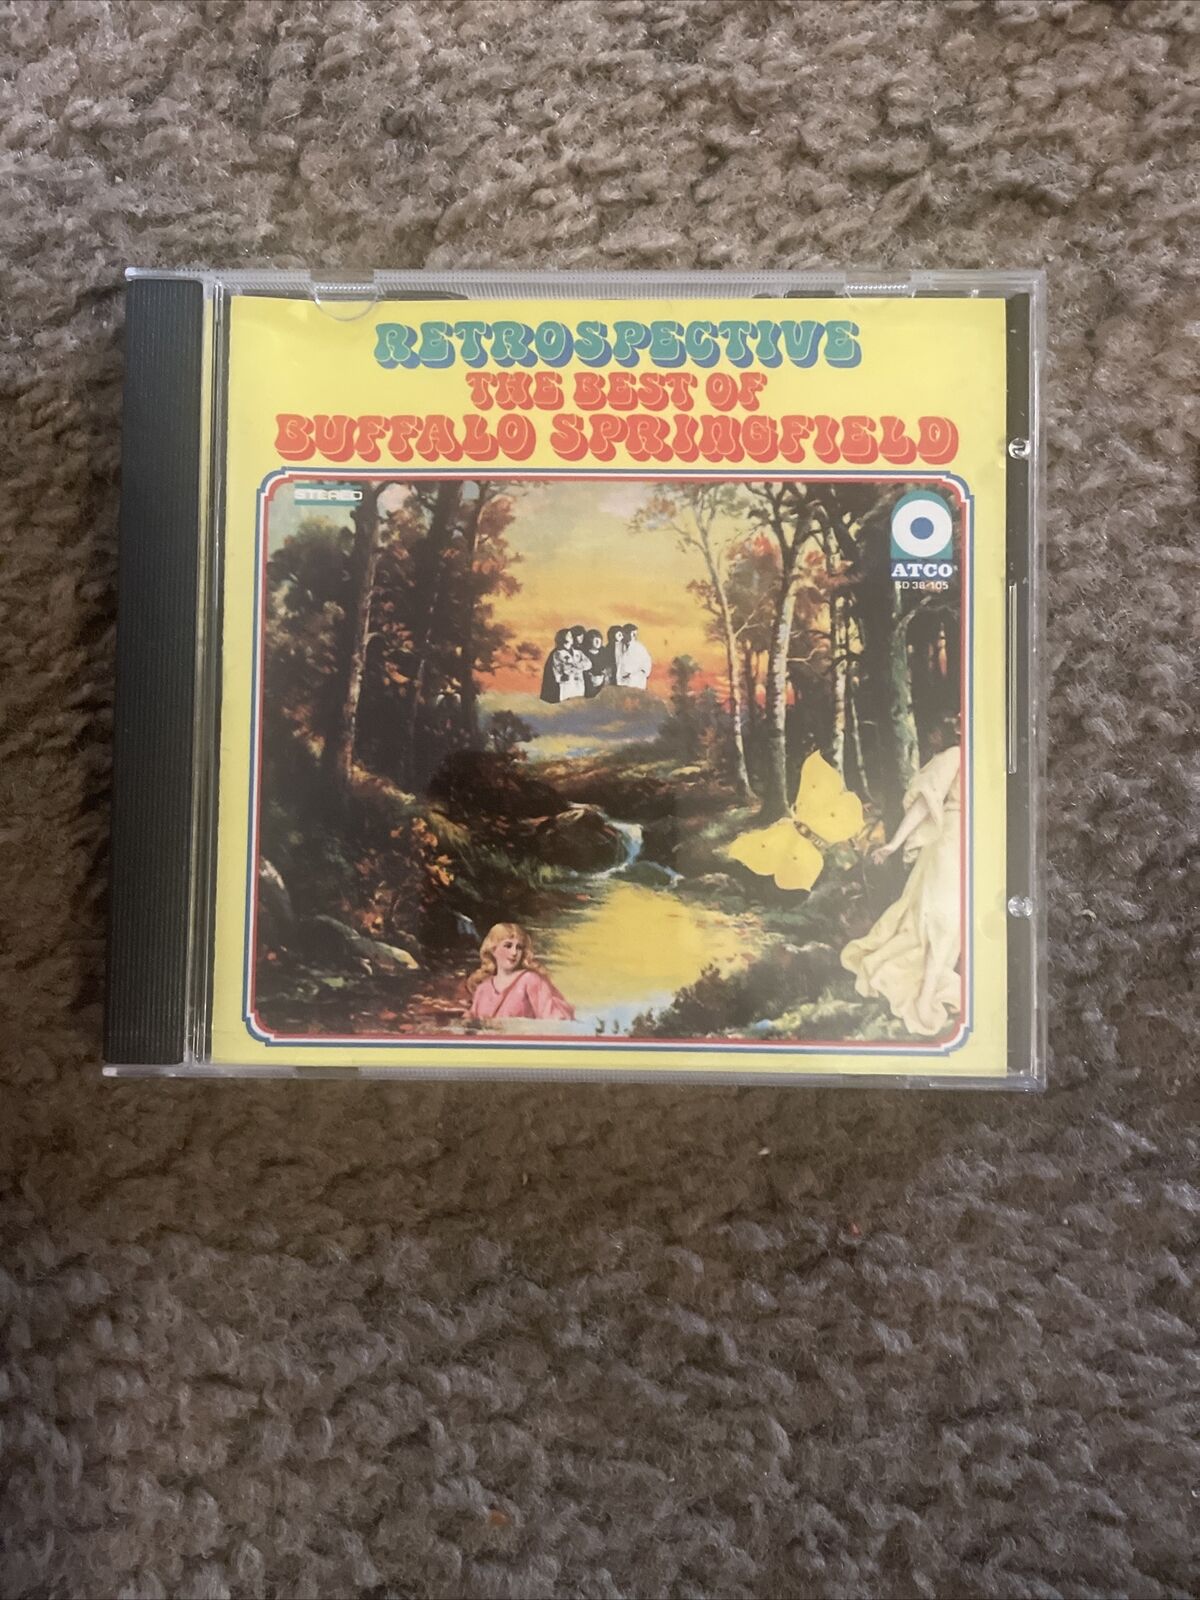 Buffalo Springfield - Retrospective: The Best of CD 1969 Atco Like New